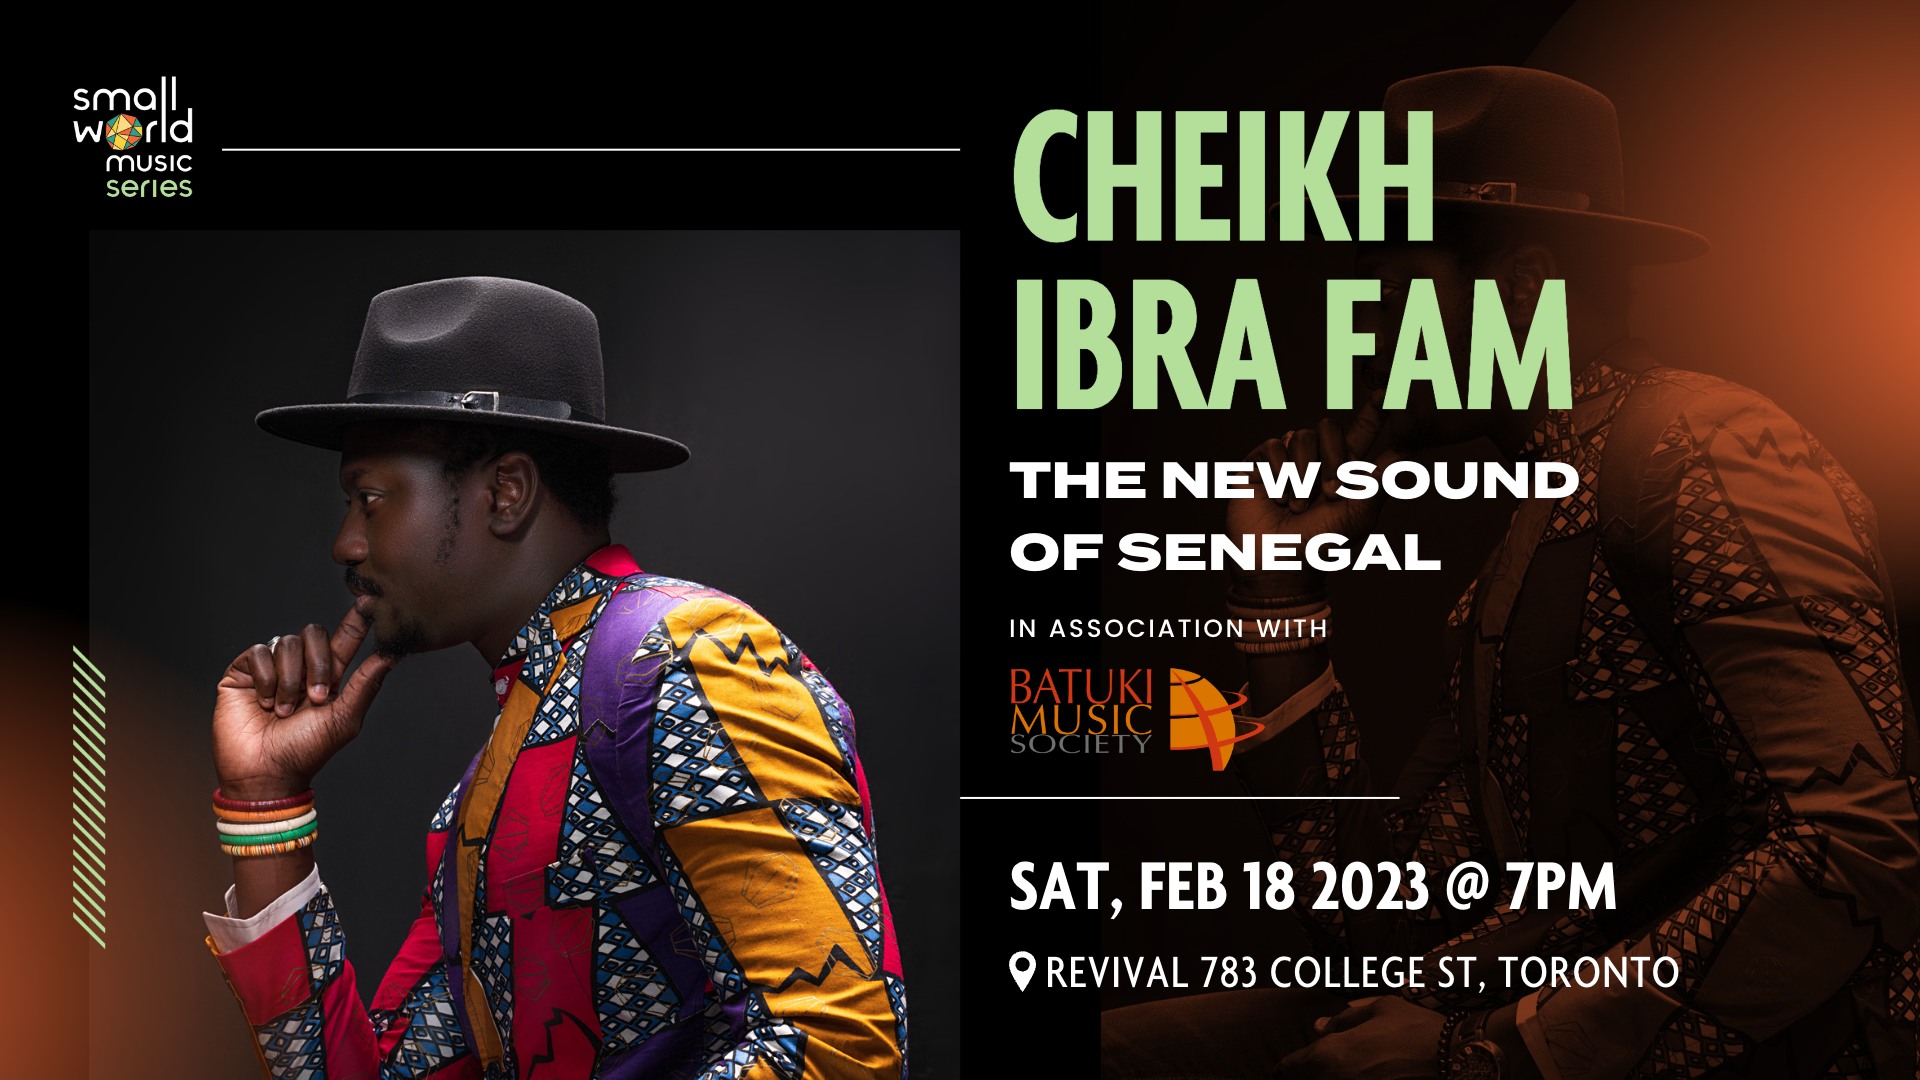 batuki music society toronto ontario canada africa african art culture artists nadine mcnulty otimoi oyemu habari concert  cheikh ibra fam